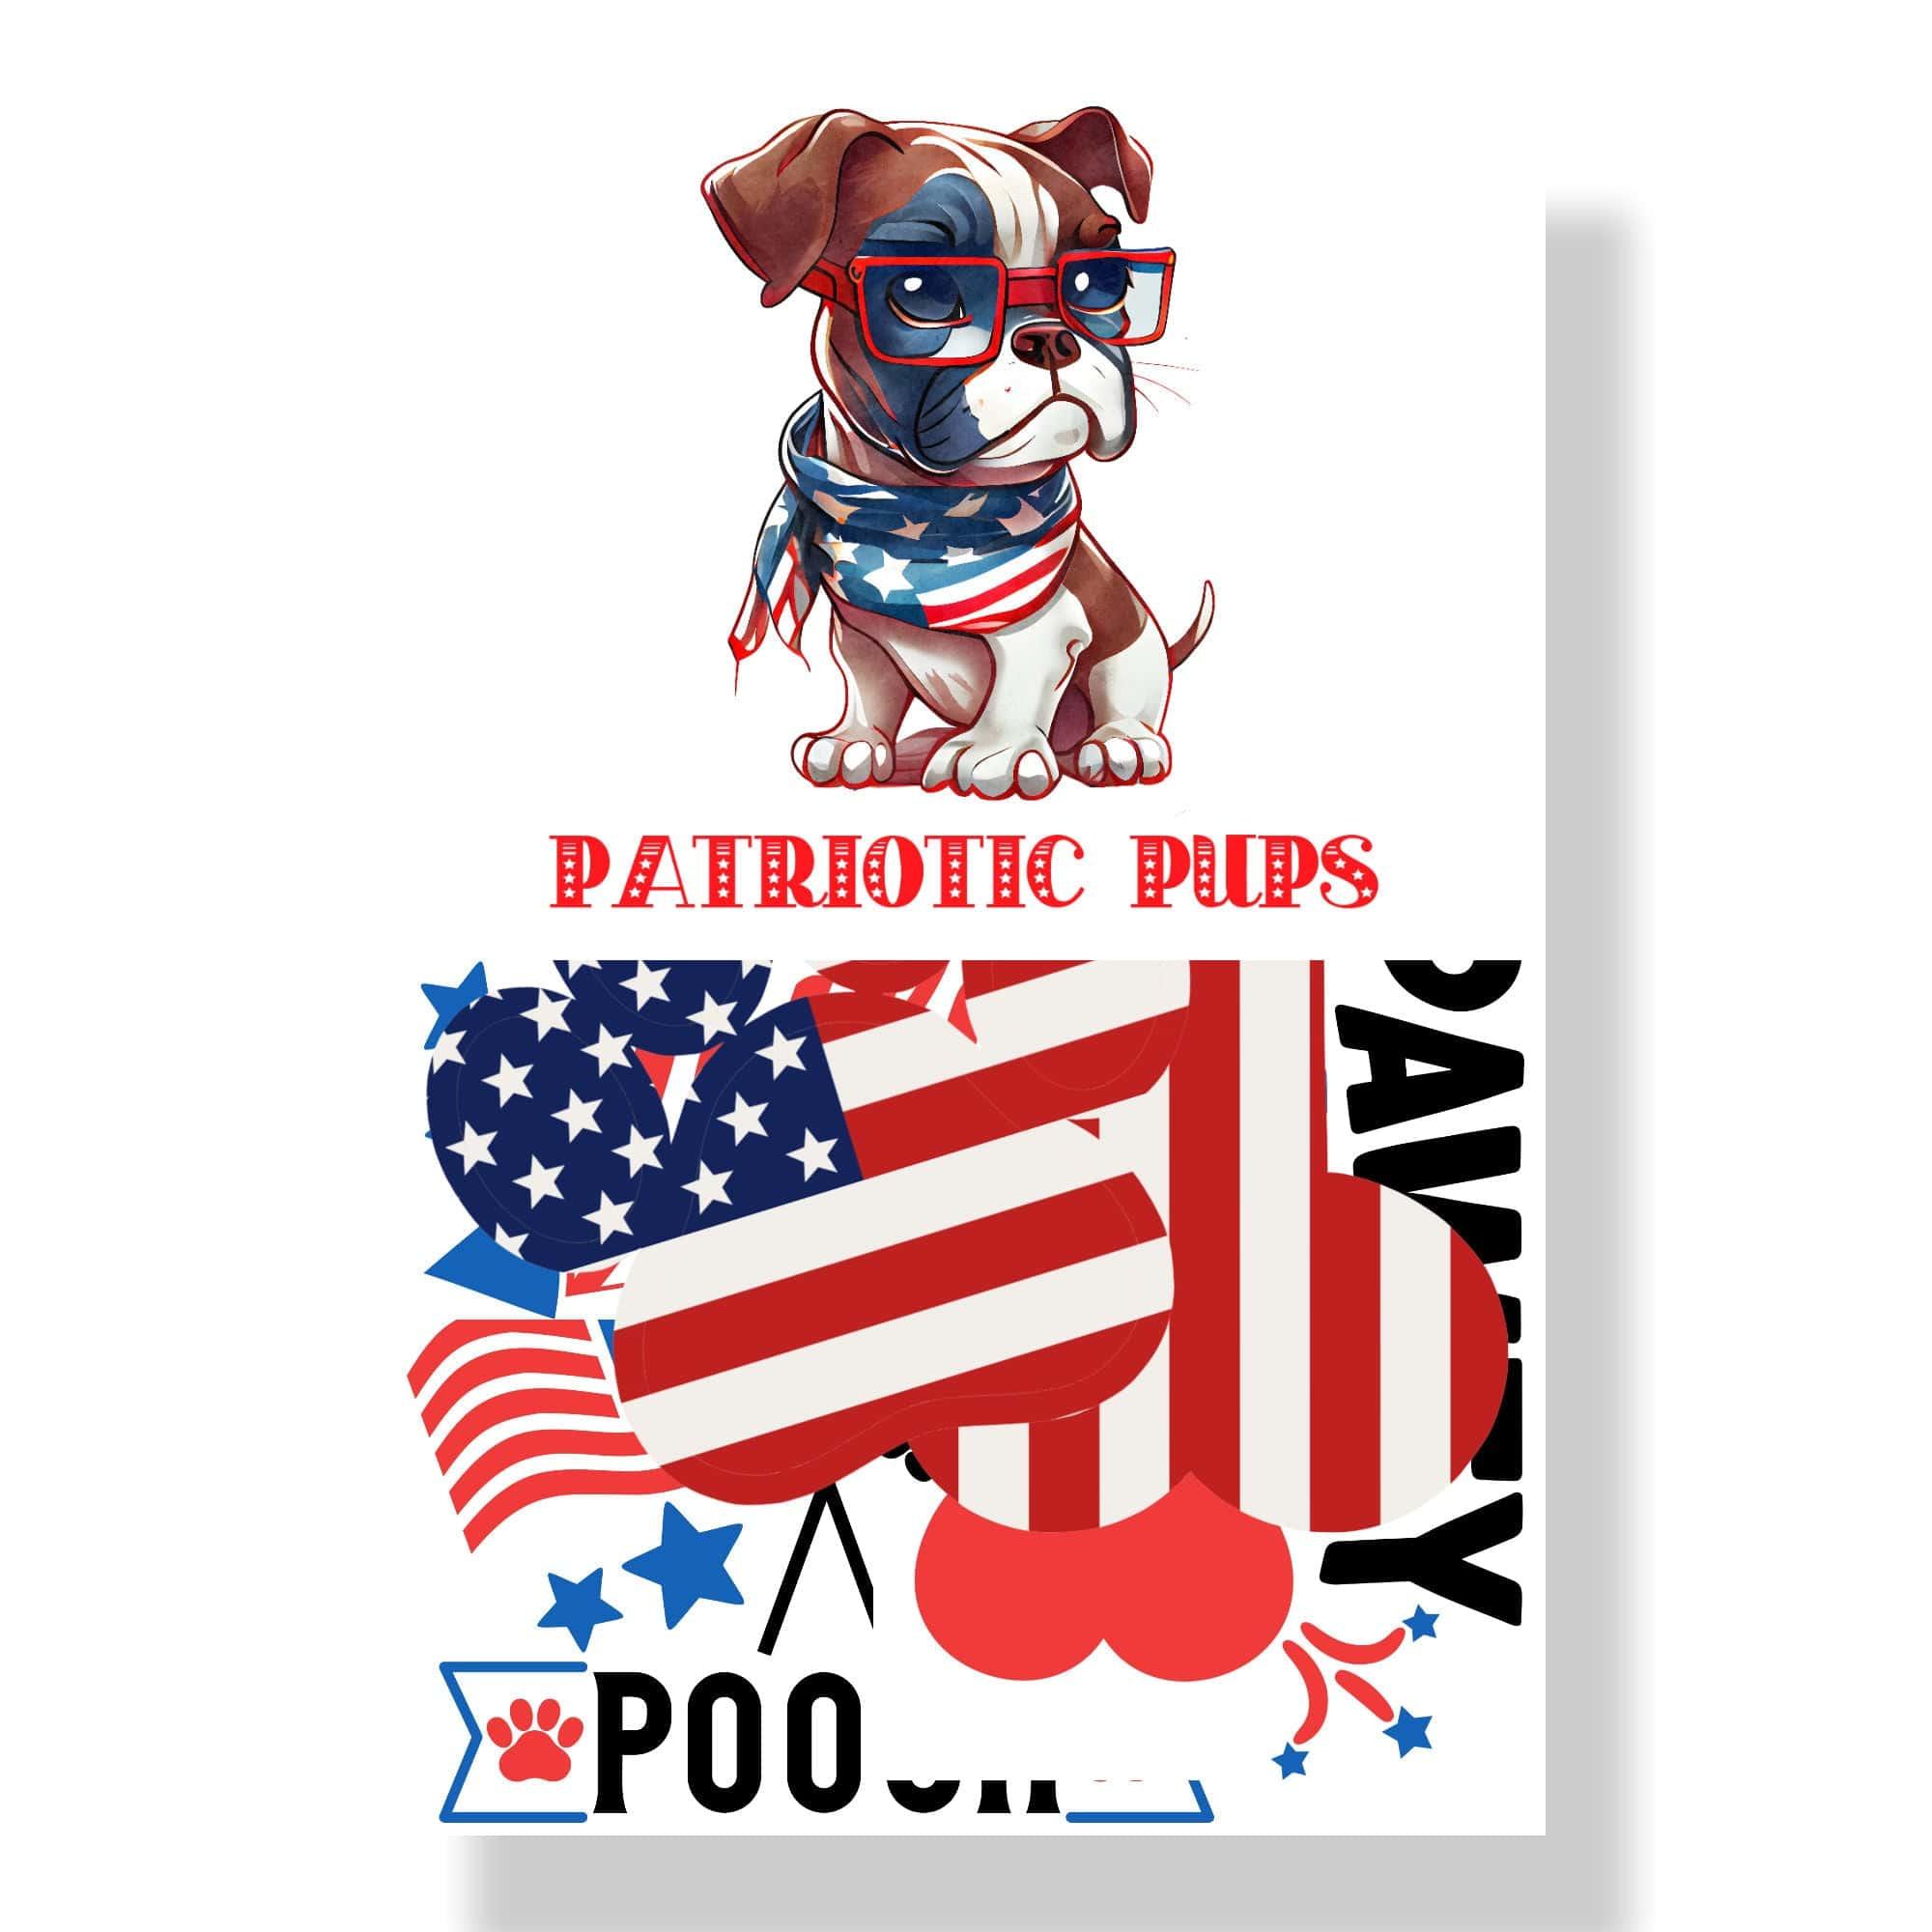 Patriotic Pups Collection Scrapbook Ephemera by SSC Designs - Scrapbook Supply Companies